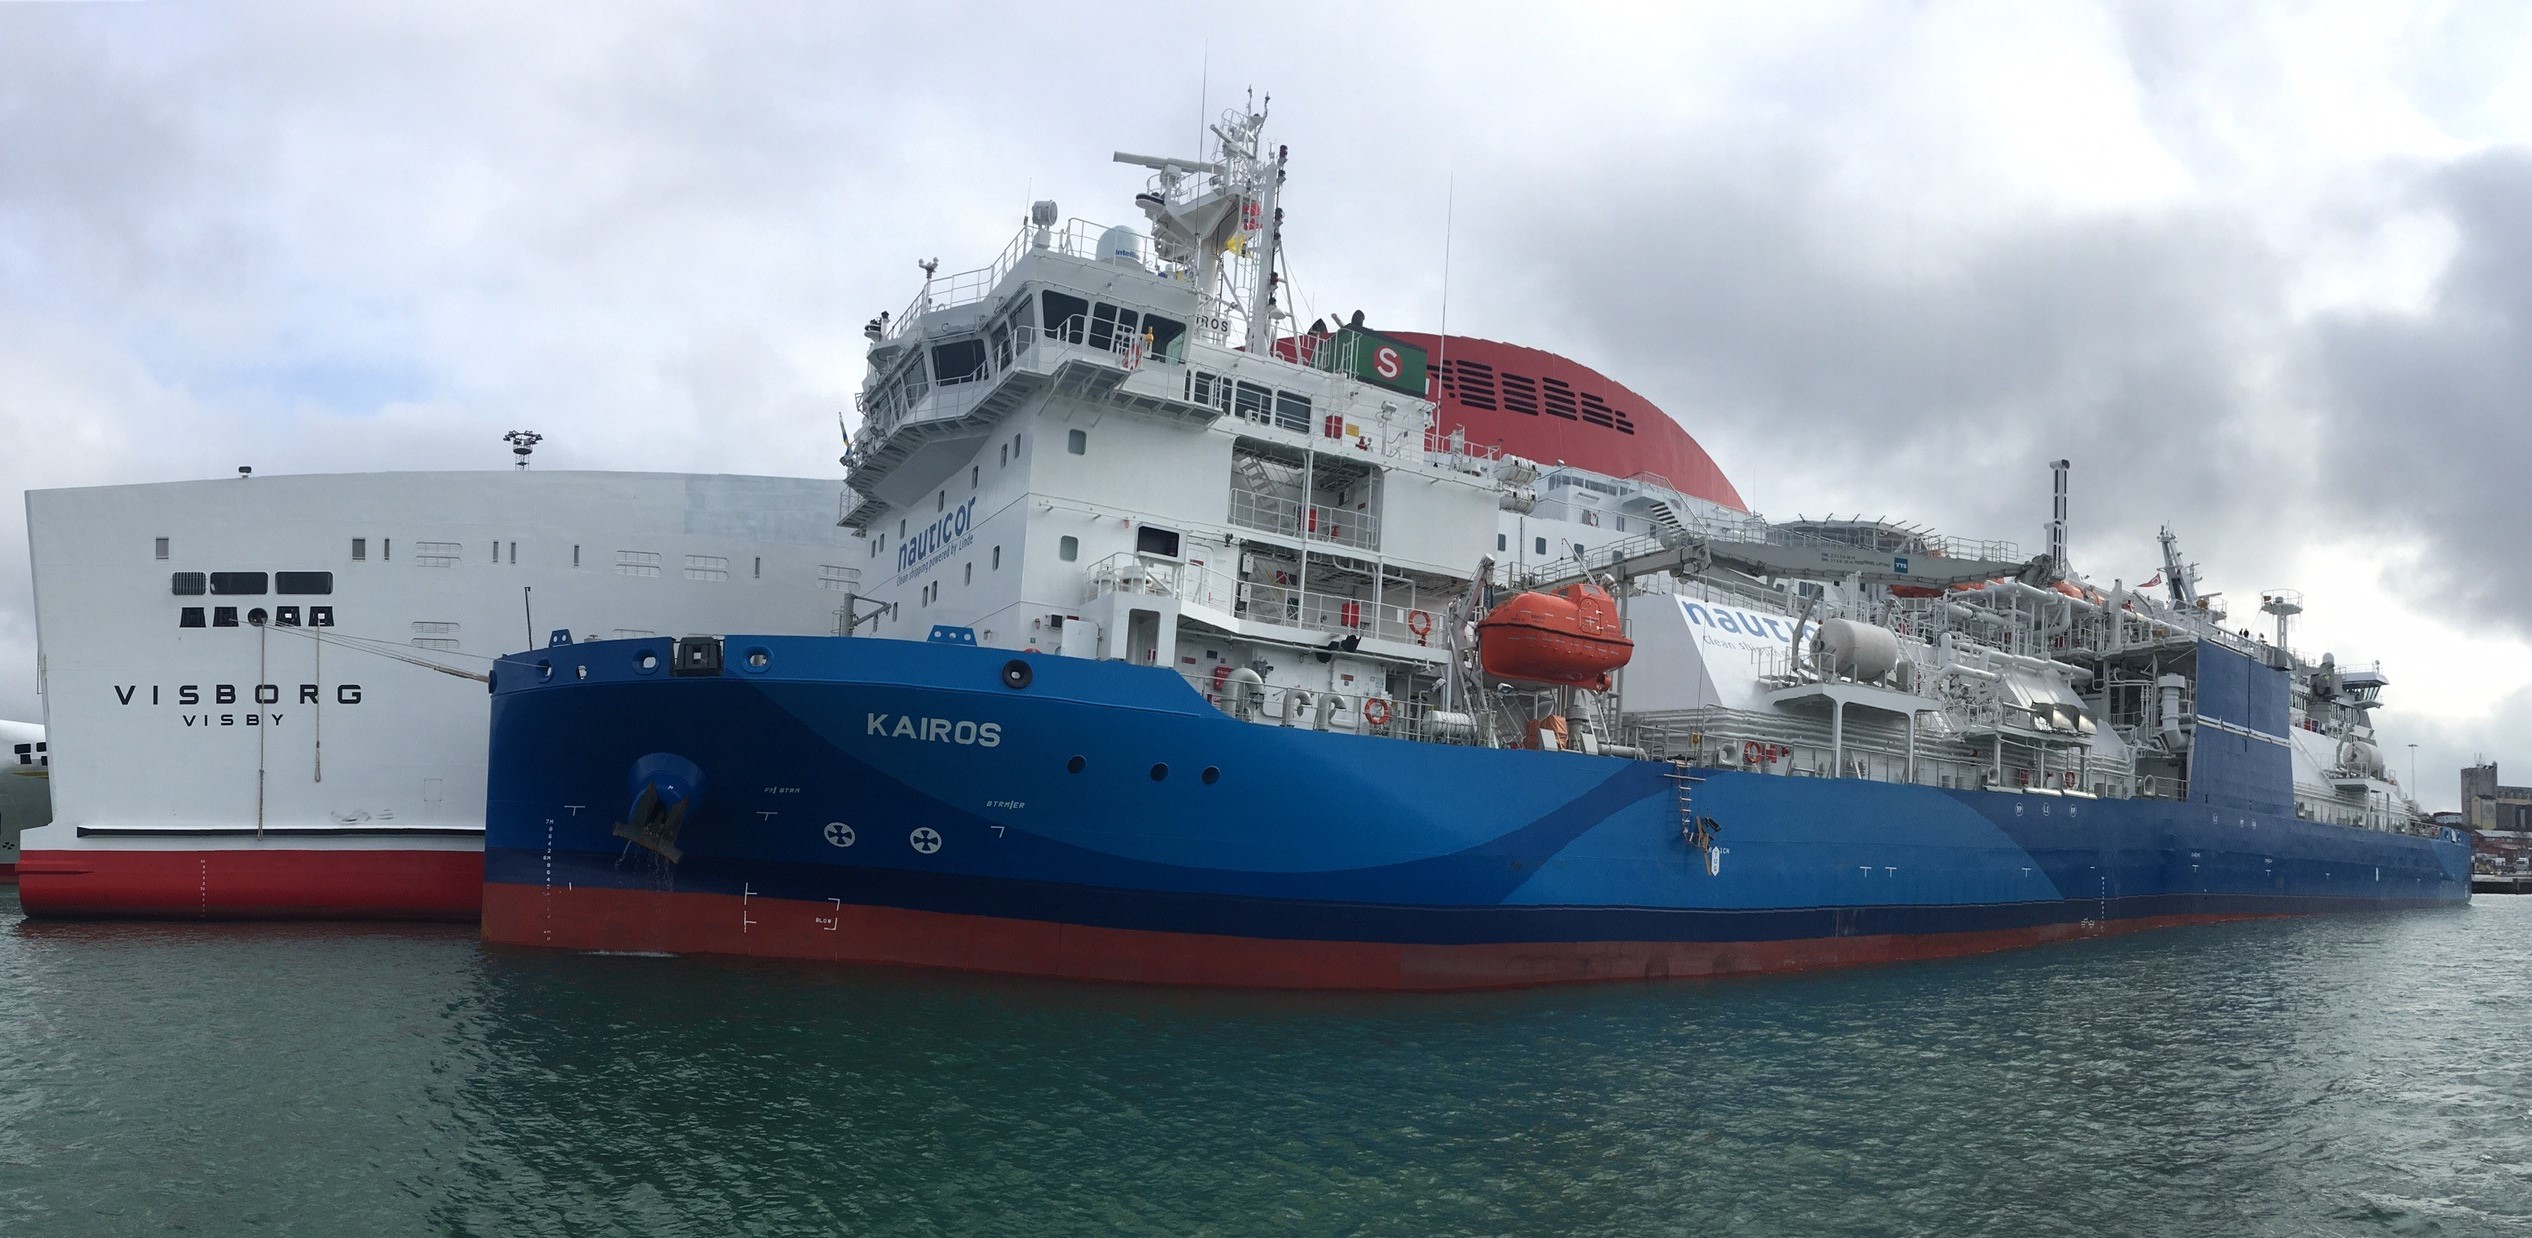 Kairos supplies LNG to Destination Gotland's ferry in Visby